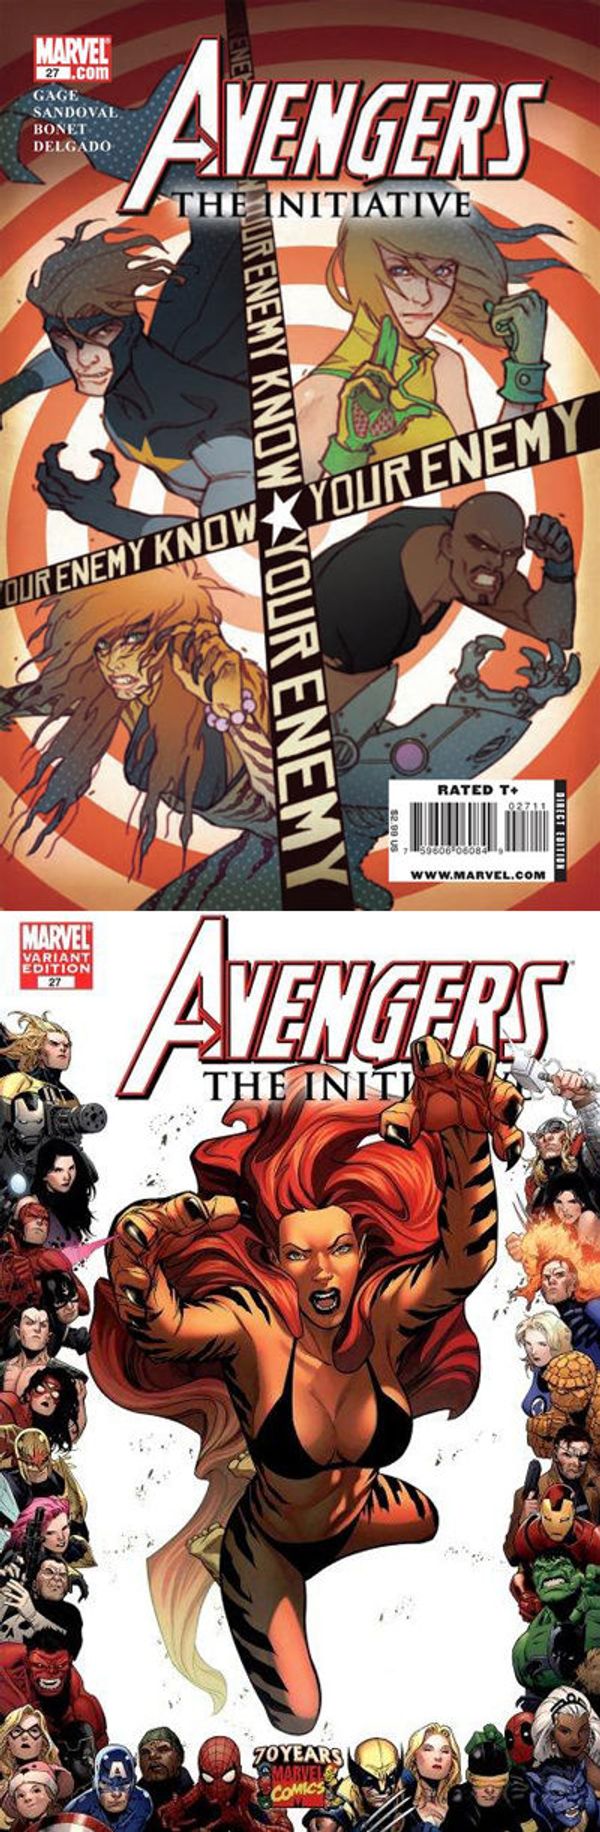 Avengers: The Initiative #27